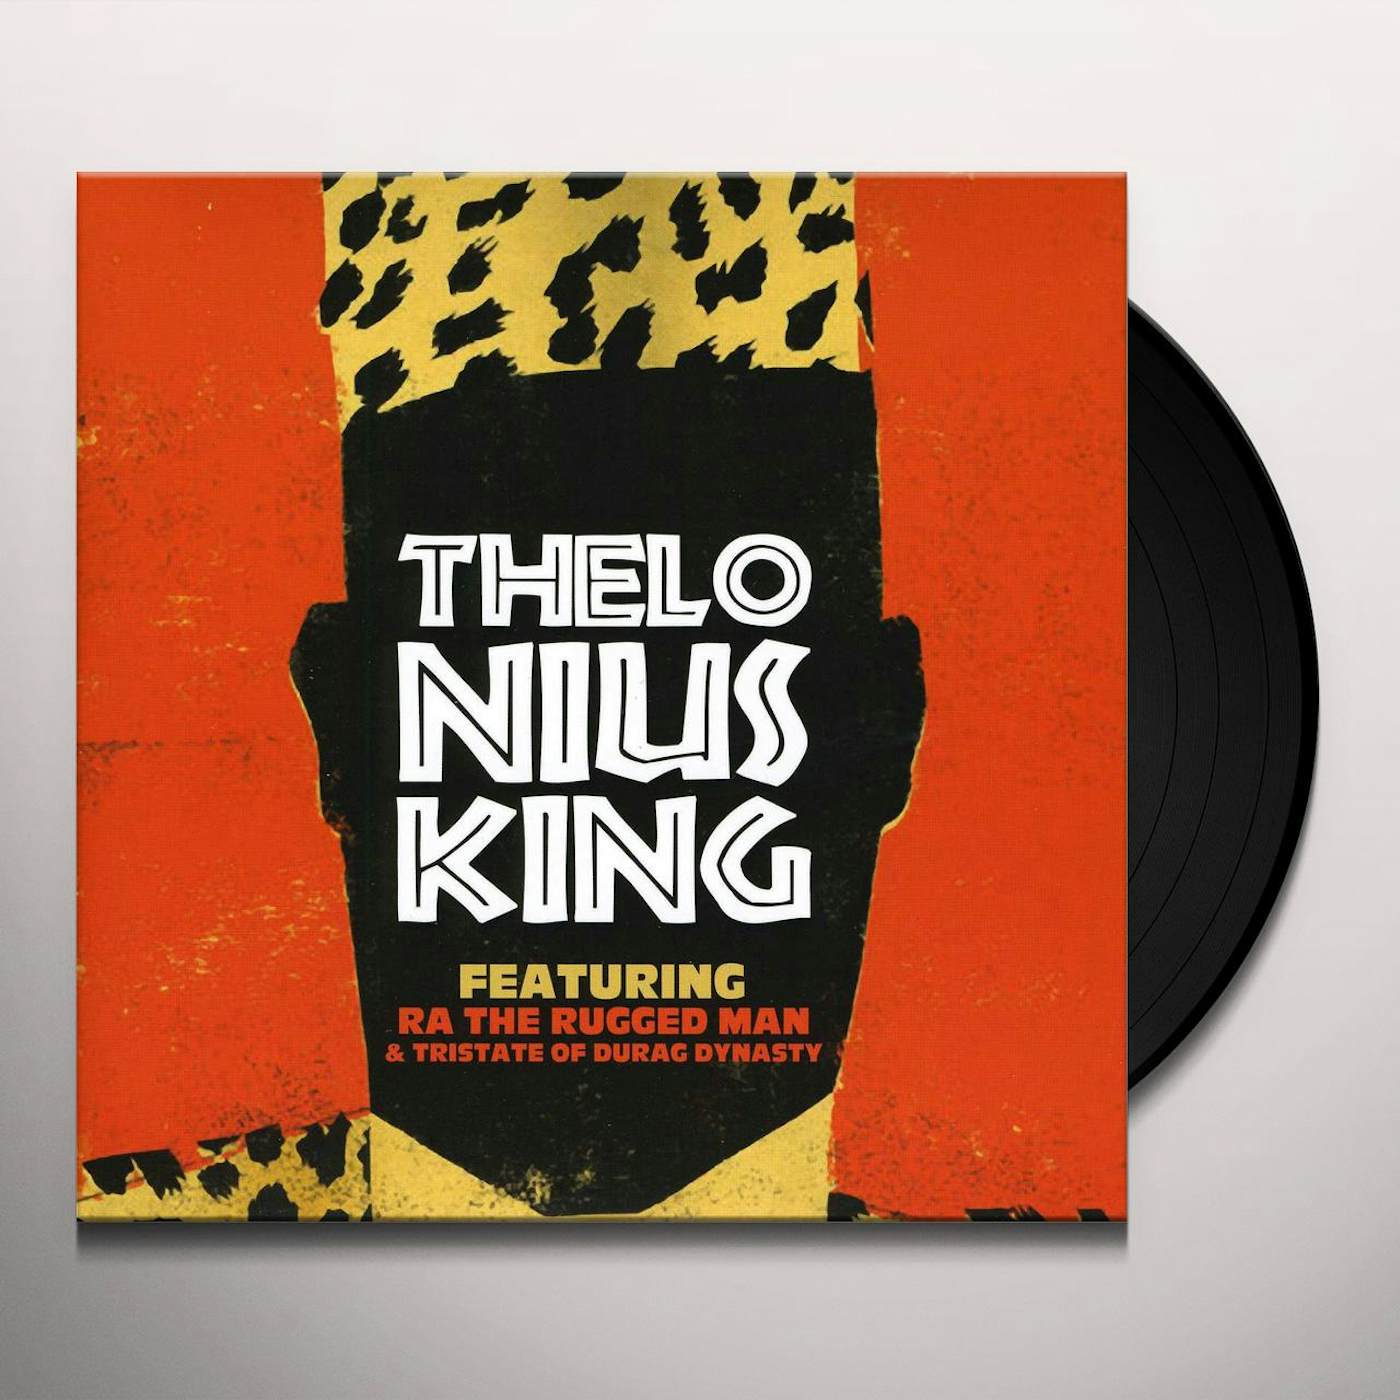 Blu Thelonius King Vinyl Record